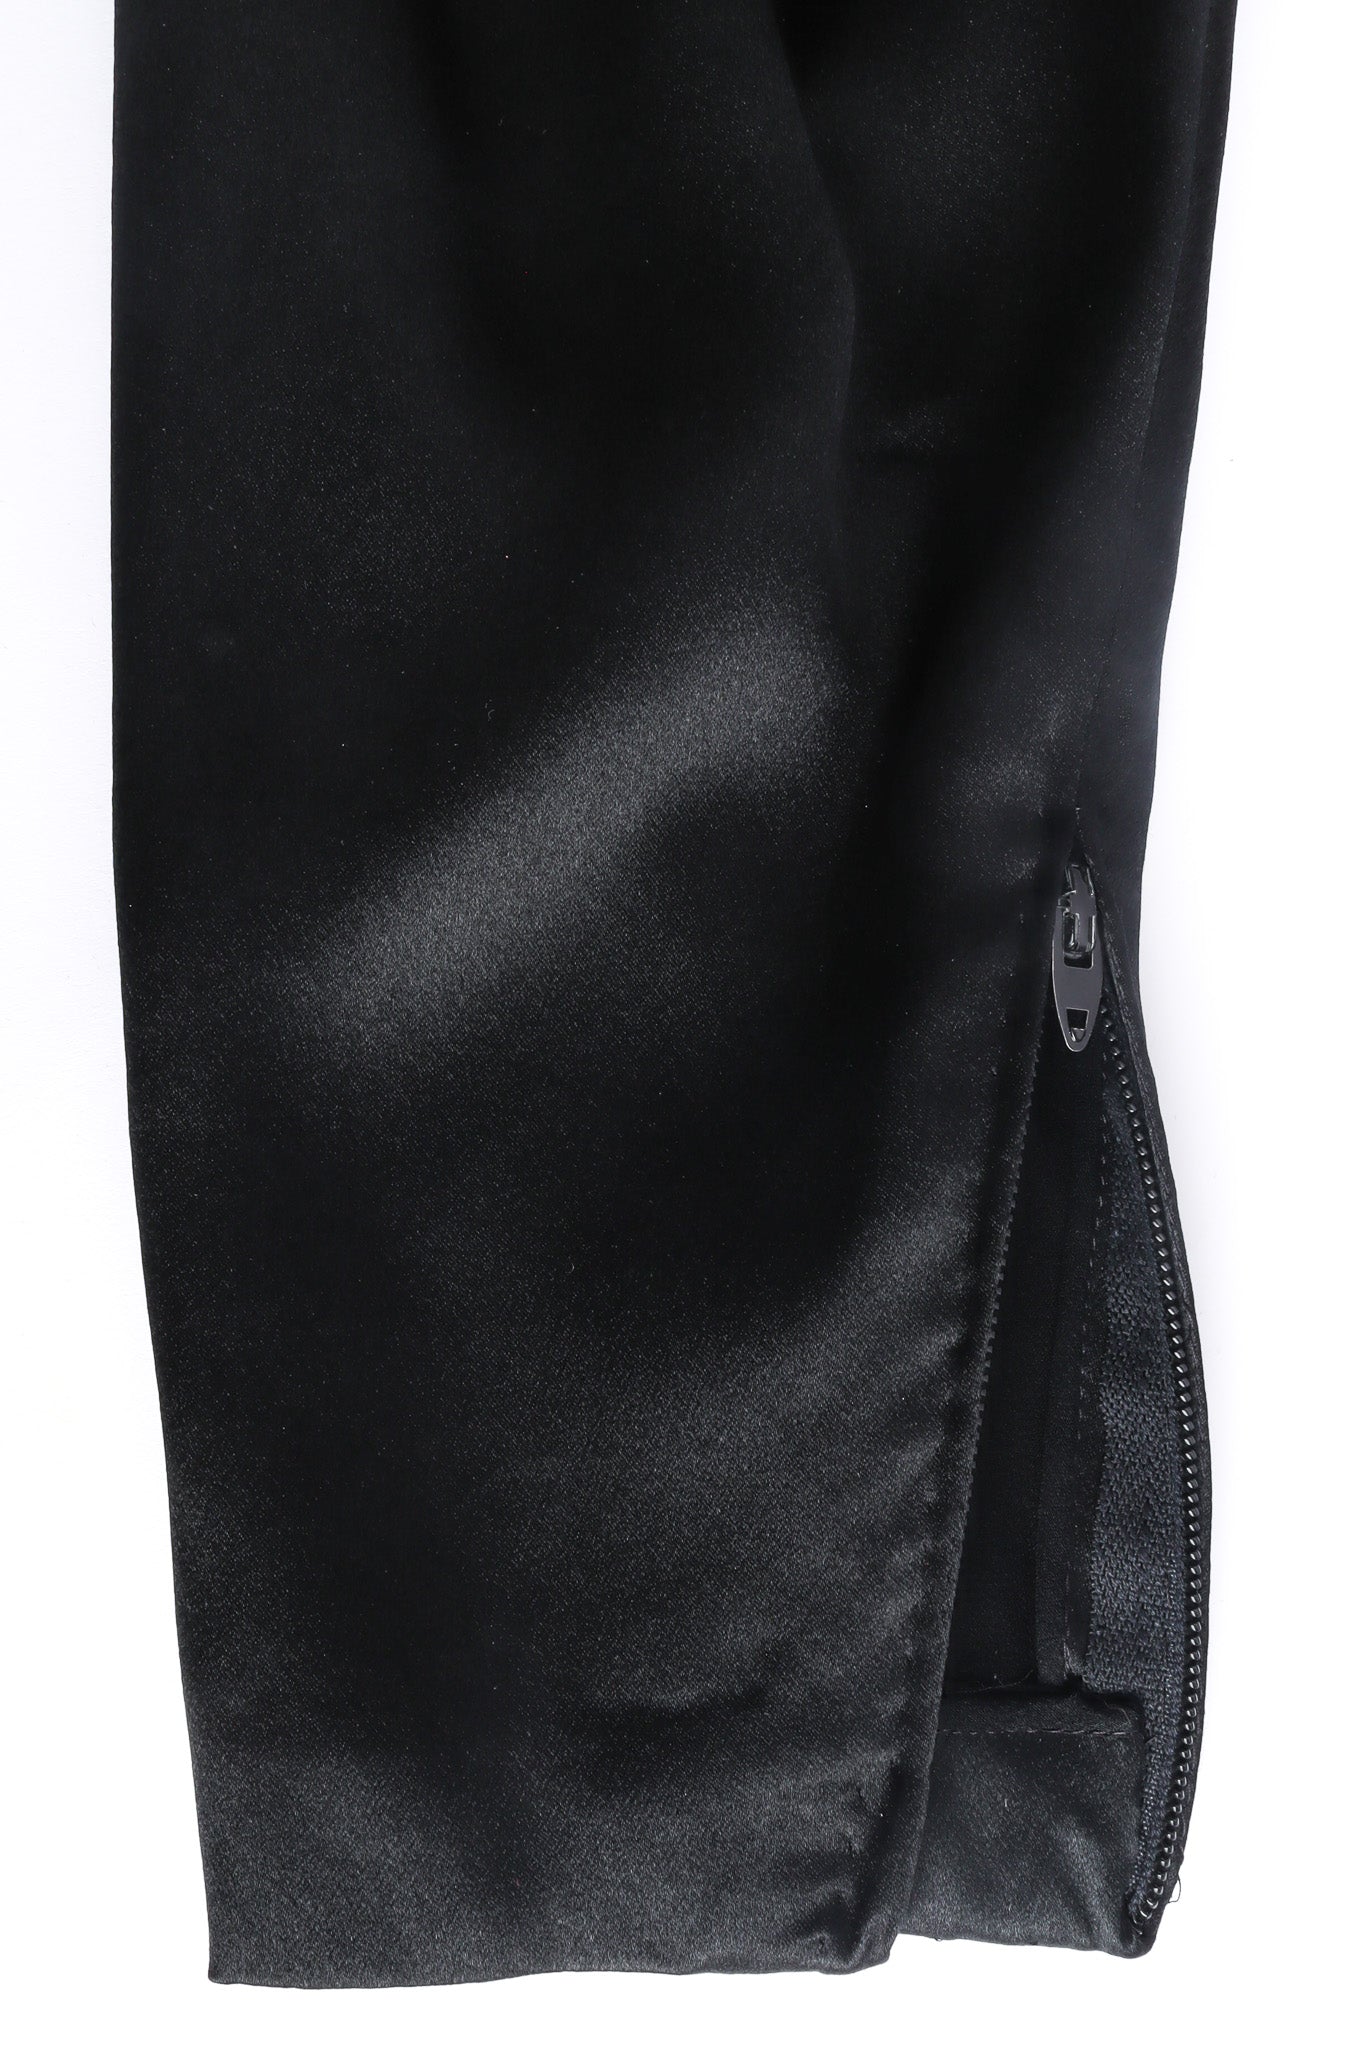 Fringe silk shift dress by Galanos Sleeve zipper Close-up @recessla